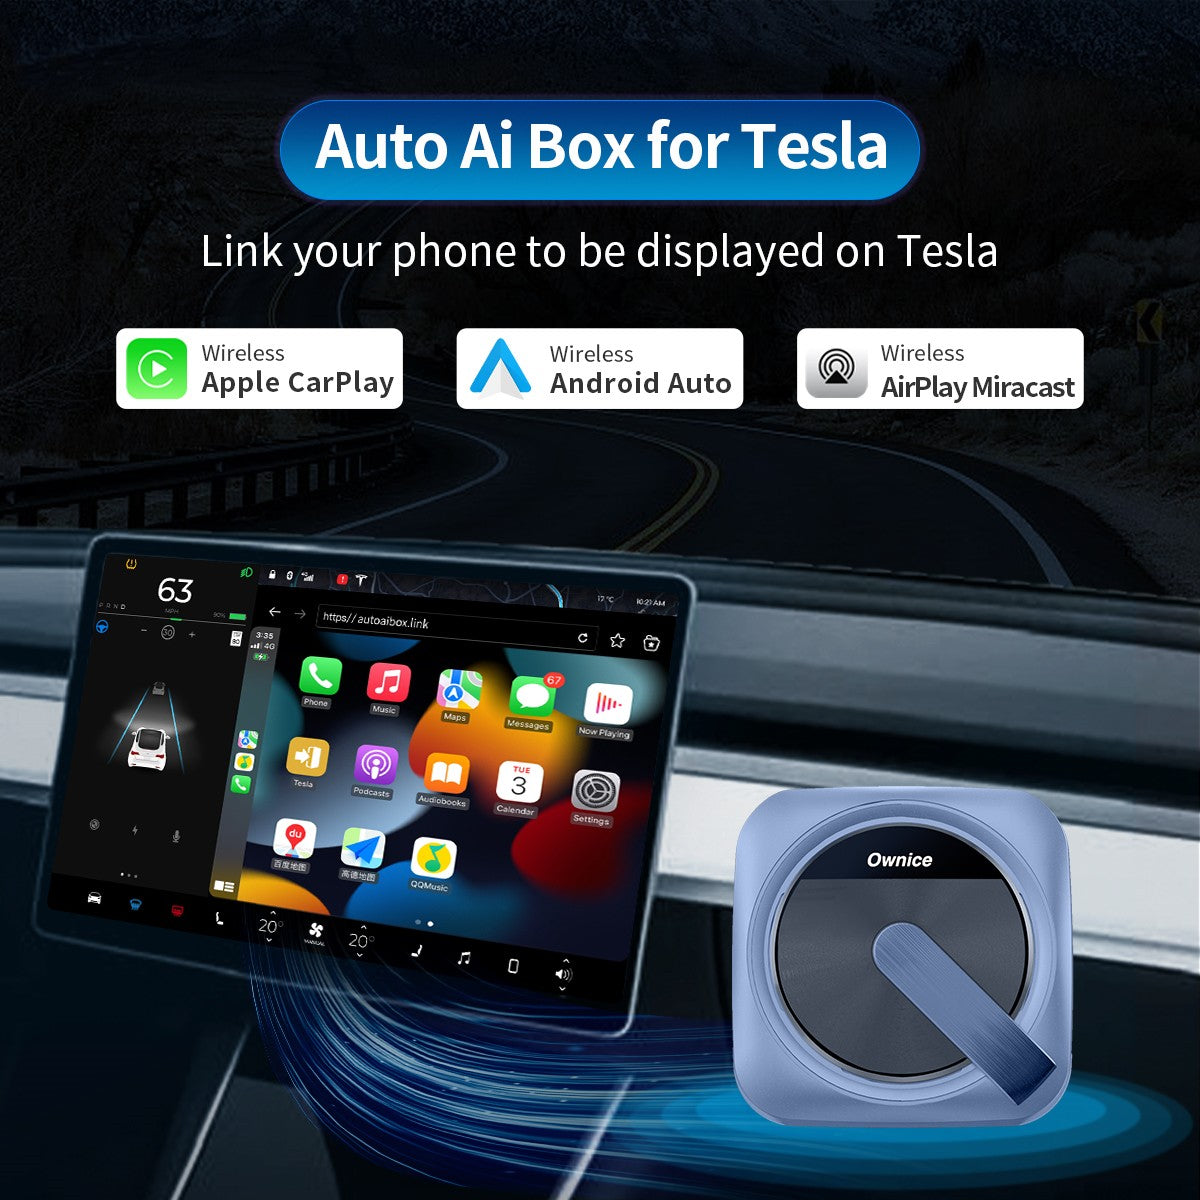 Auto-KI-Box für Tesla/Interieur/Tesla/Tesla-Modifikation/Autozubehör/Tesla- Zubehör/Interieurmodifikation/Carplay